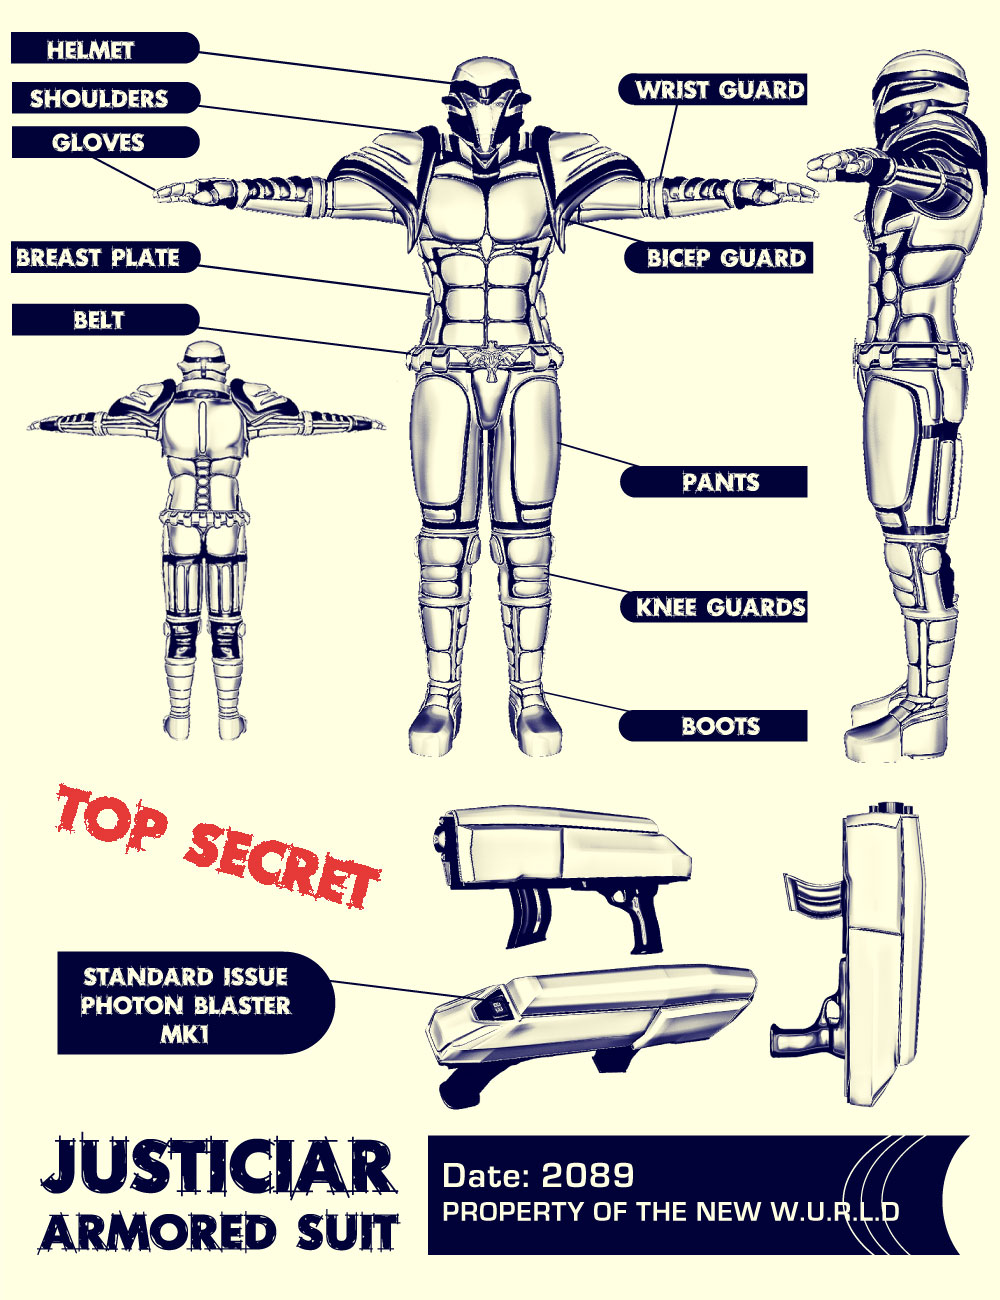 Justiciar Armored Suit by: Design Anvil, 3D Models by Daz 3D